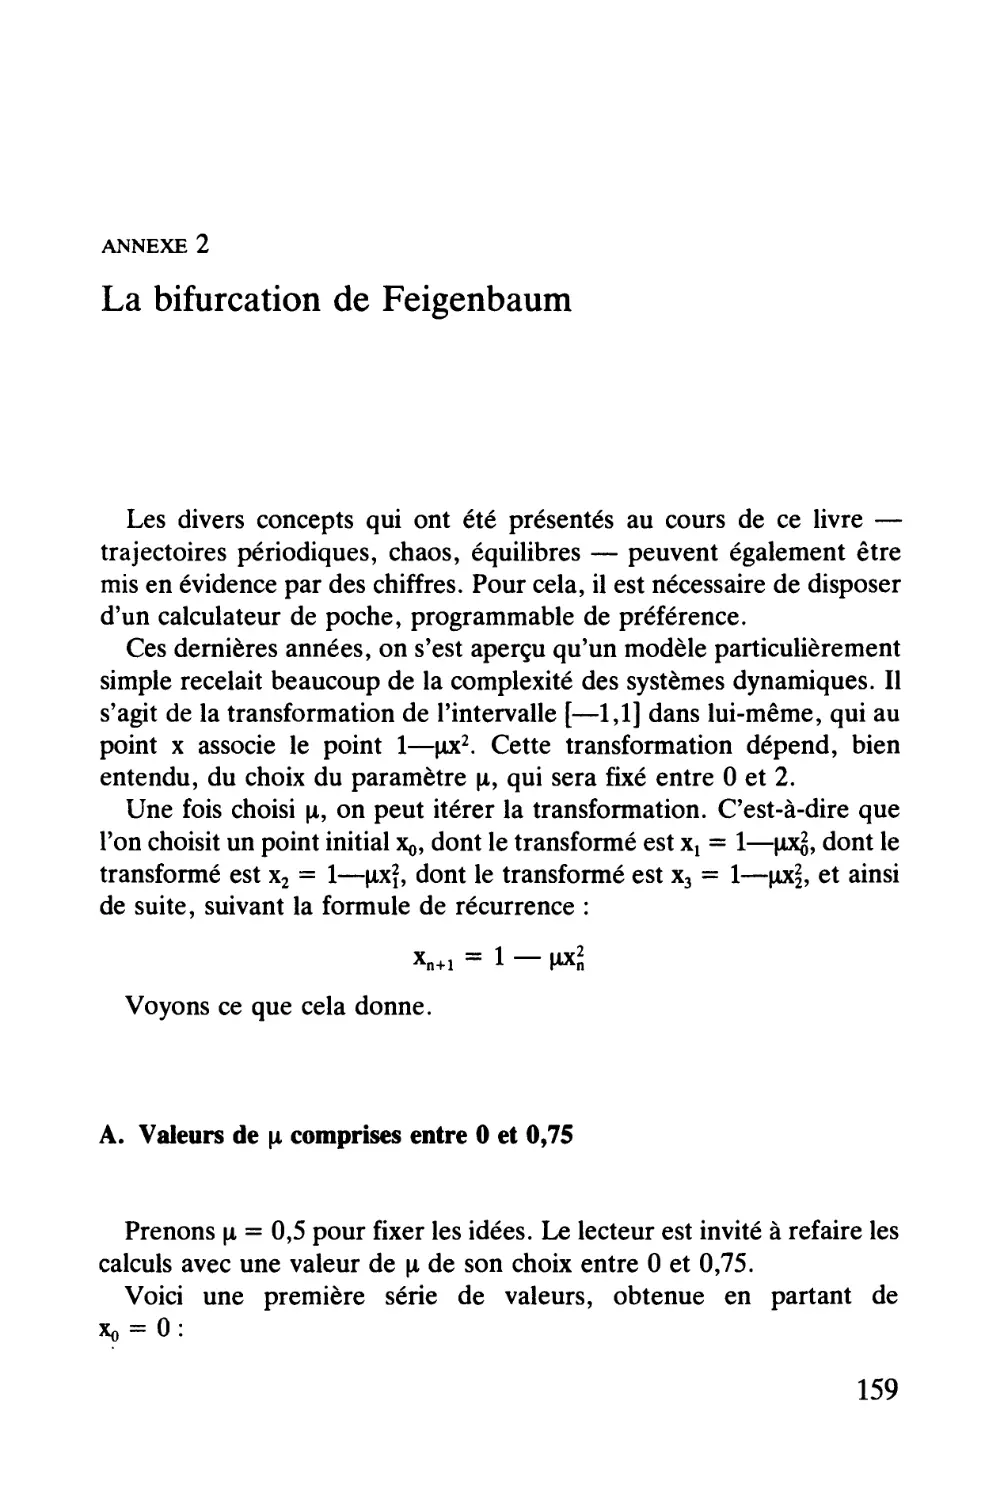 Annexe 2. La bifurcation de Feigenbaum